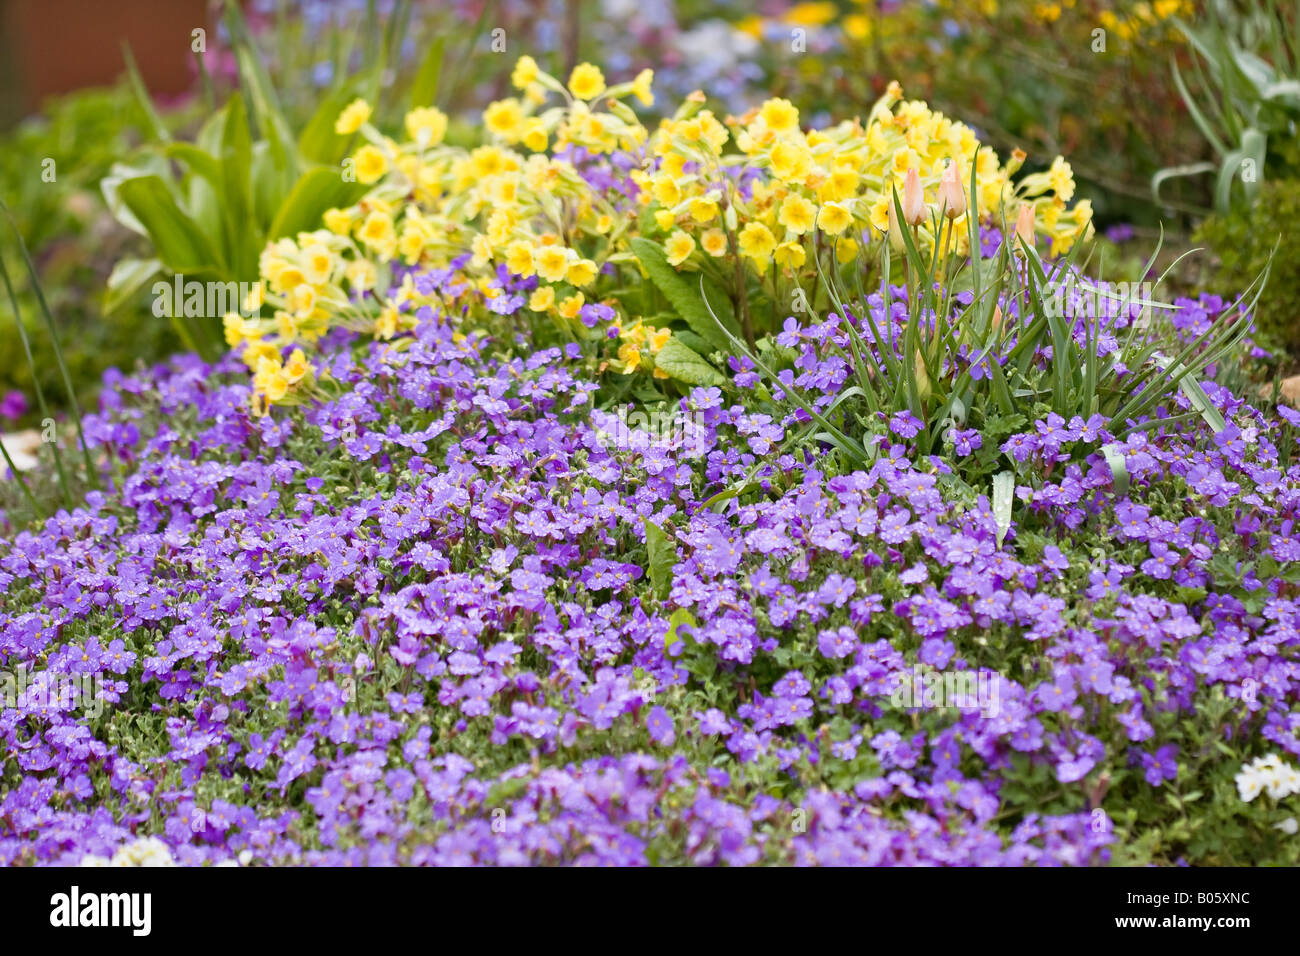 Purple Aubretia and Yellow Cowslips (Primula veris) in bloom in Spring garden Stock Photo